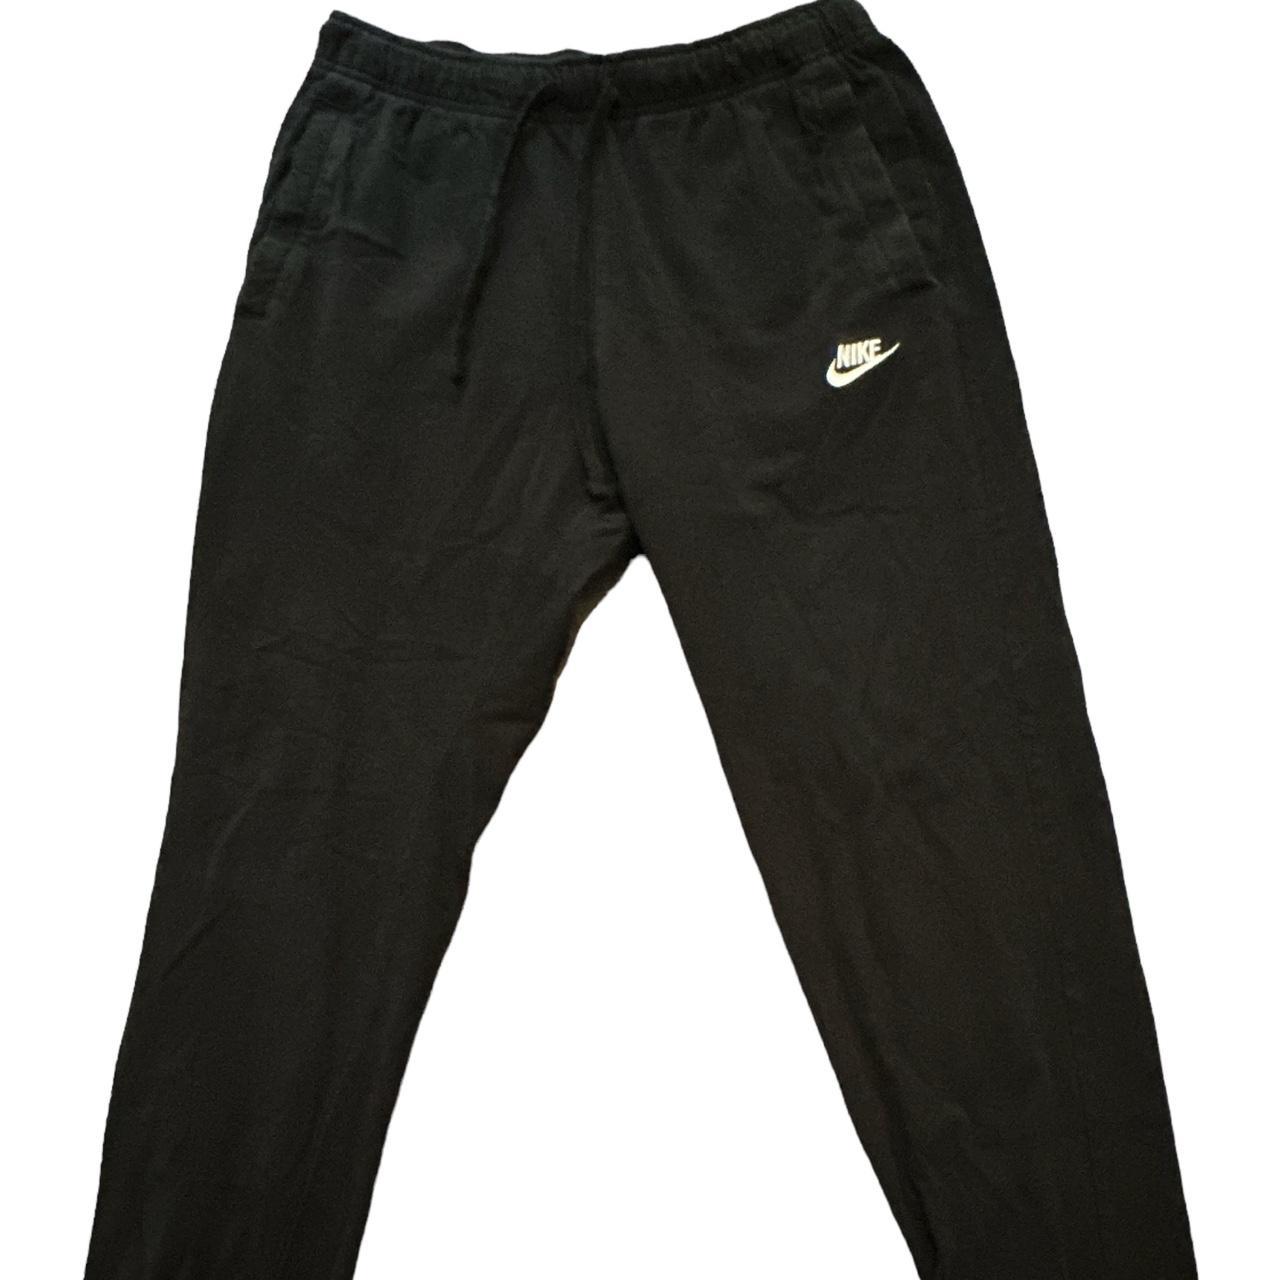 Black cuffed Nike sweatpants - Depop